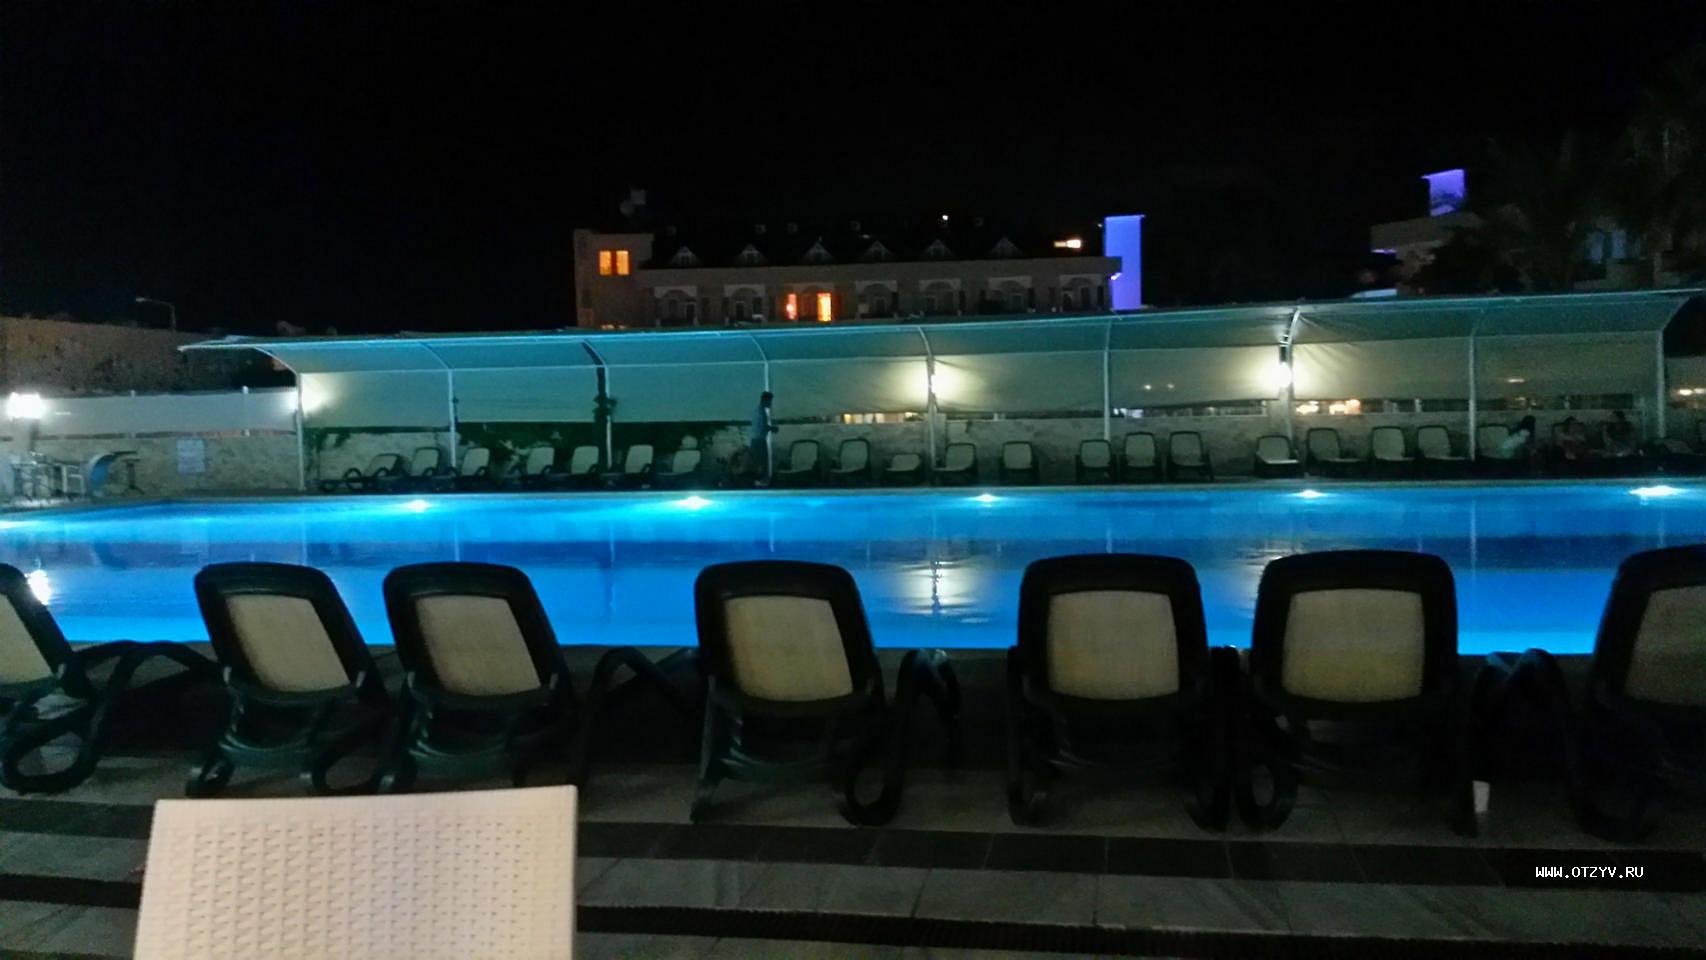 Palmet Resort Kiris Hotel